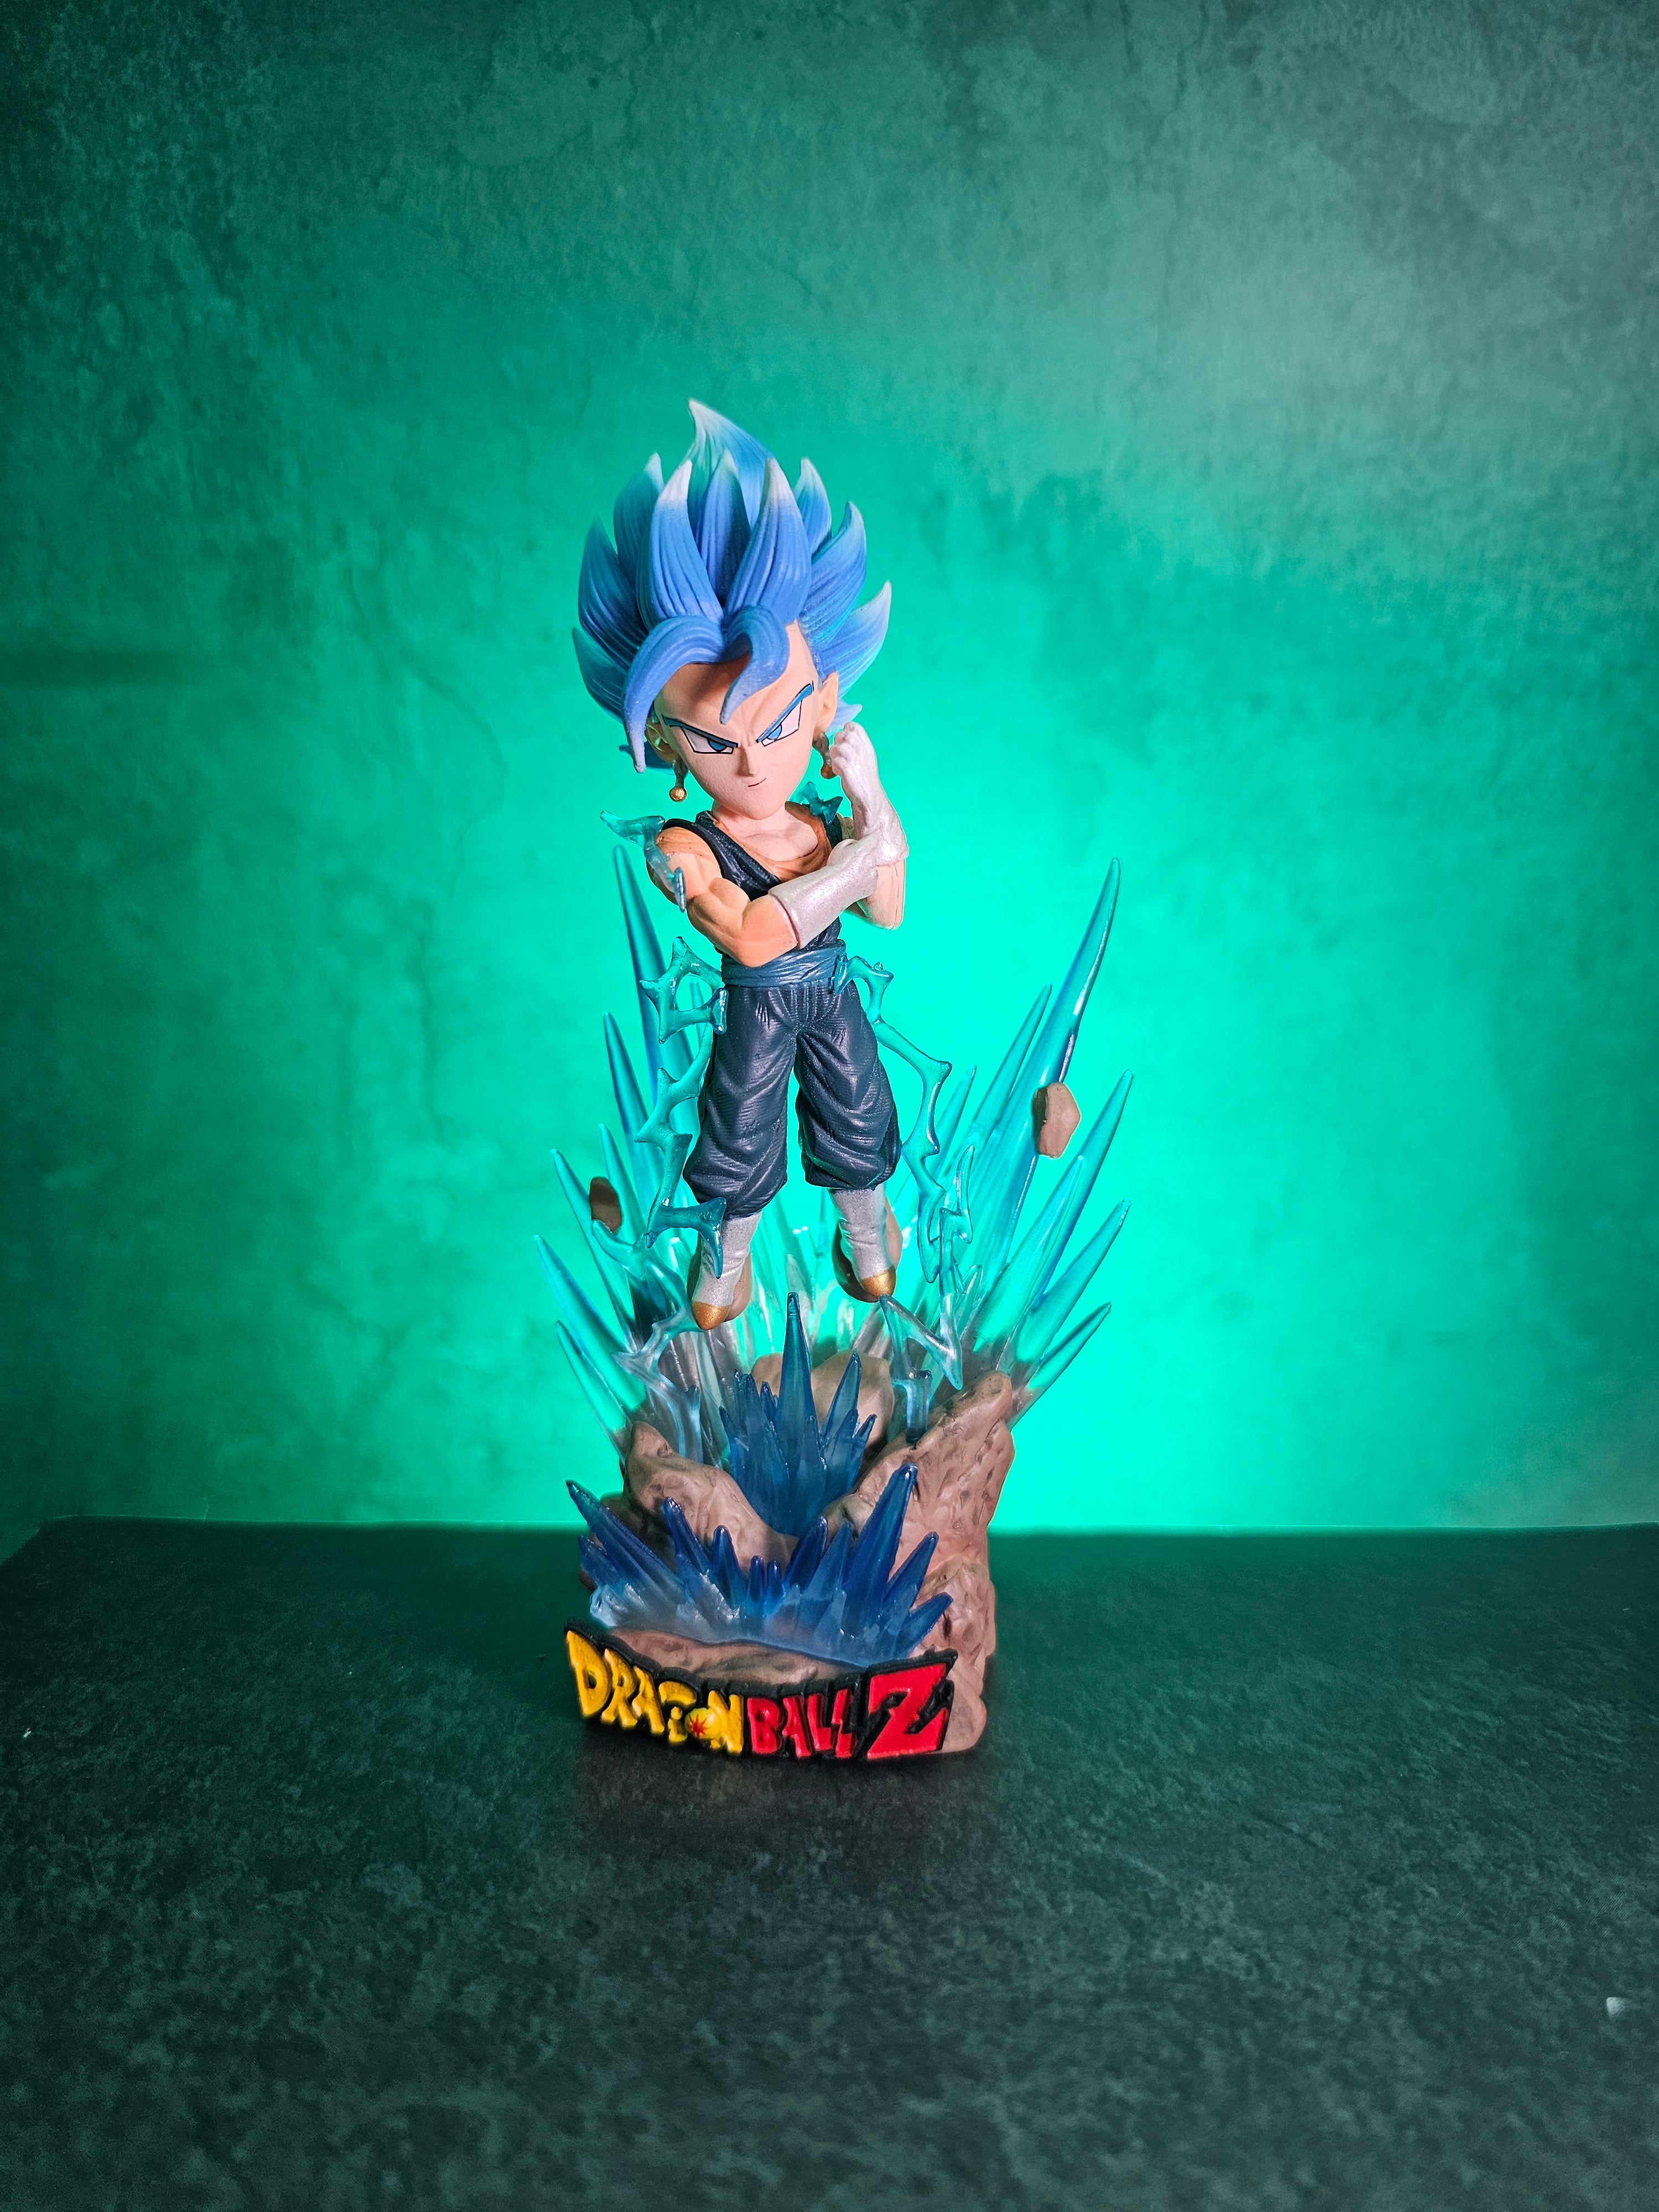 Goku Black Power Up by DragonBallAffinity on DeviantArt